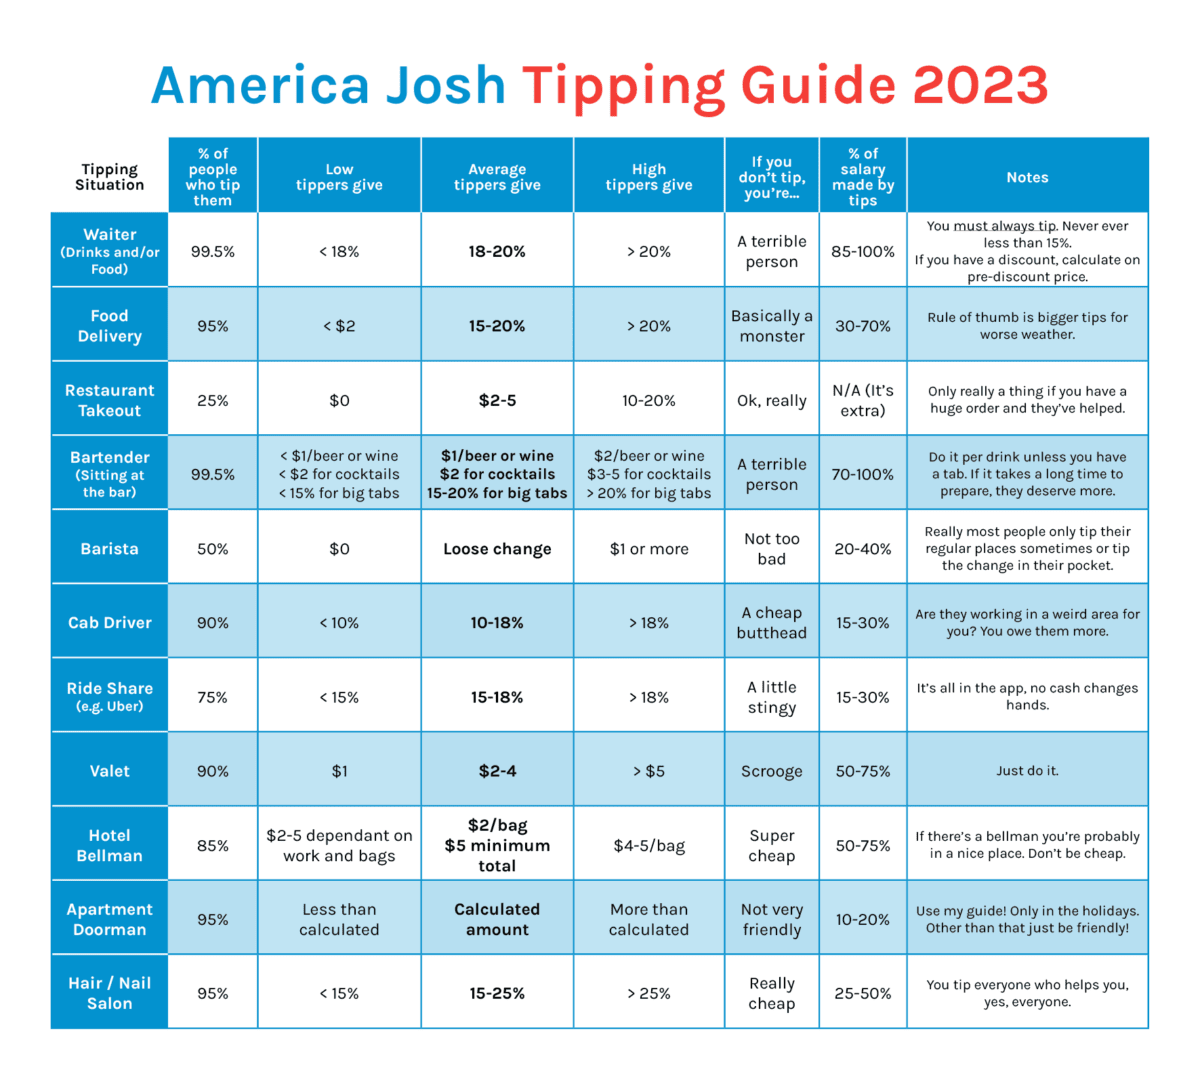 America Josh USA Tipping Guide 2023